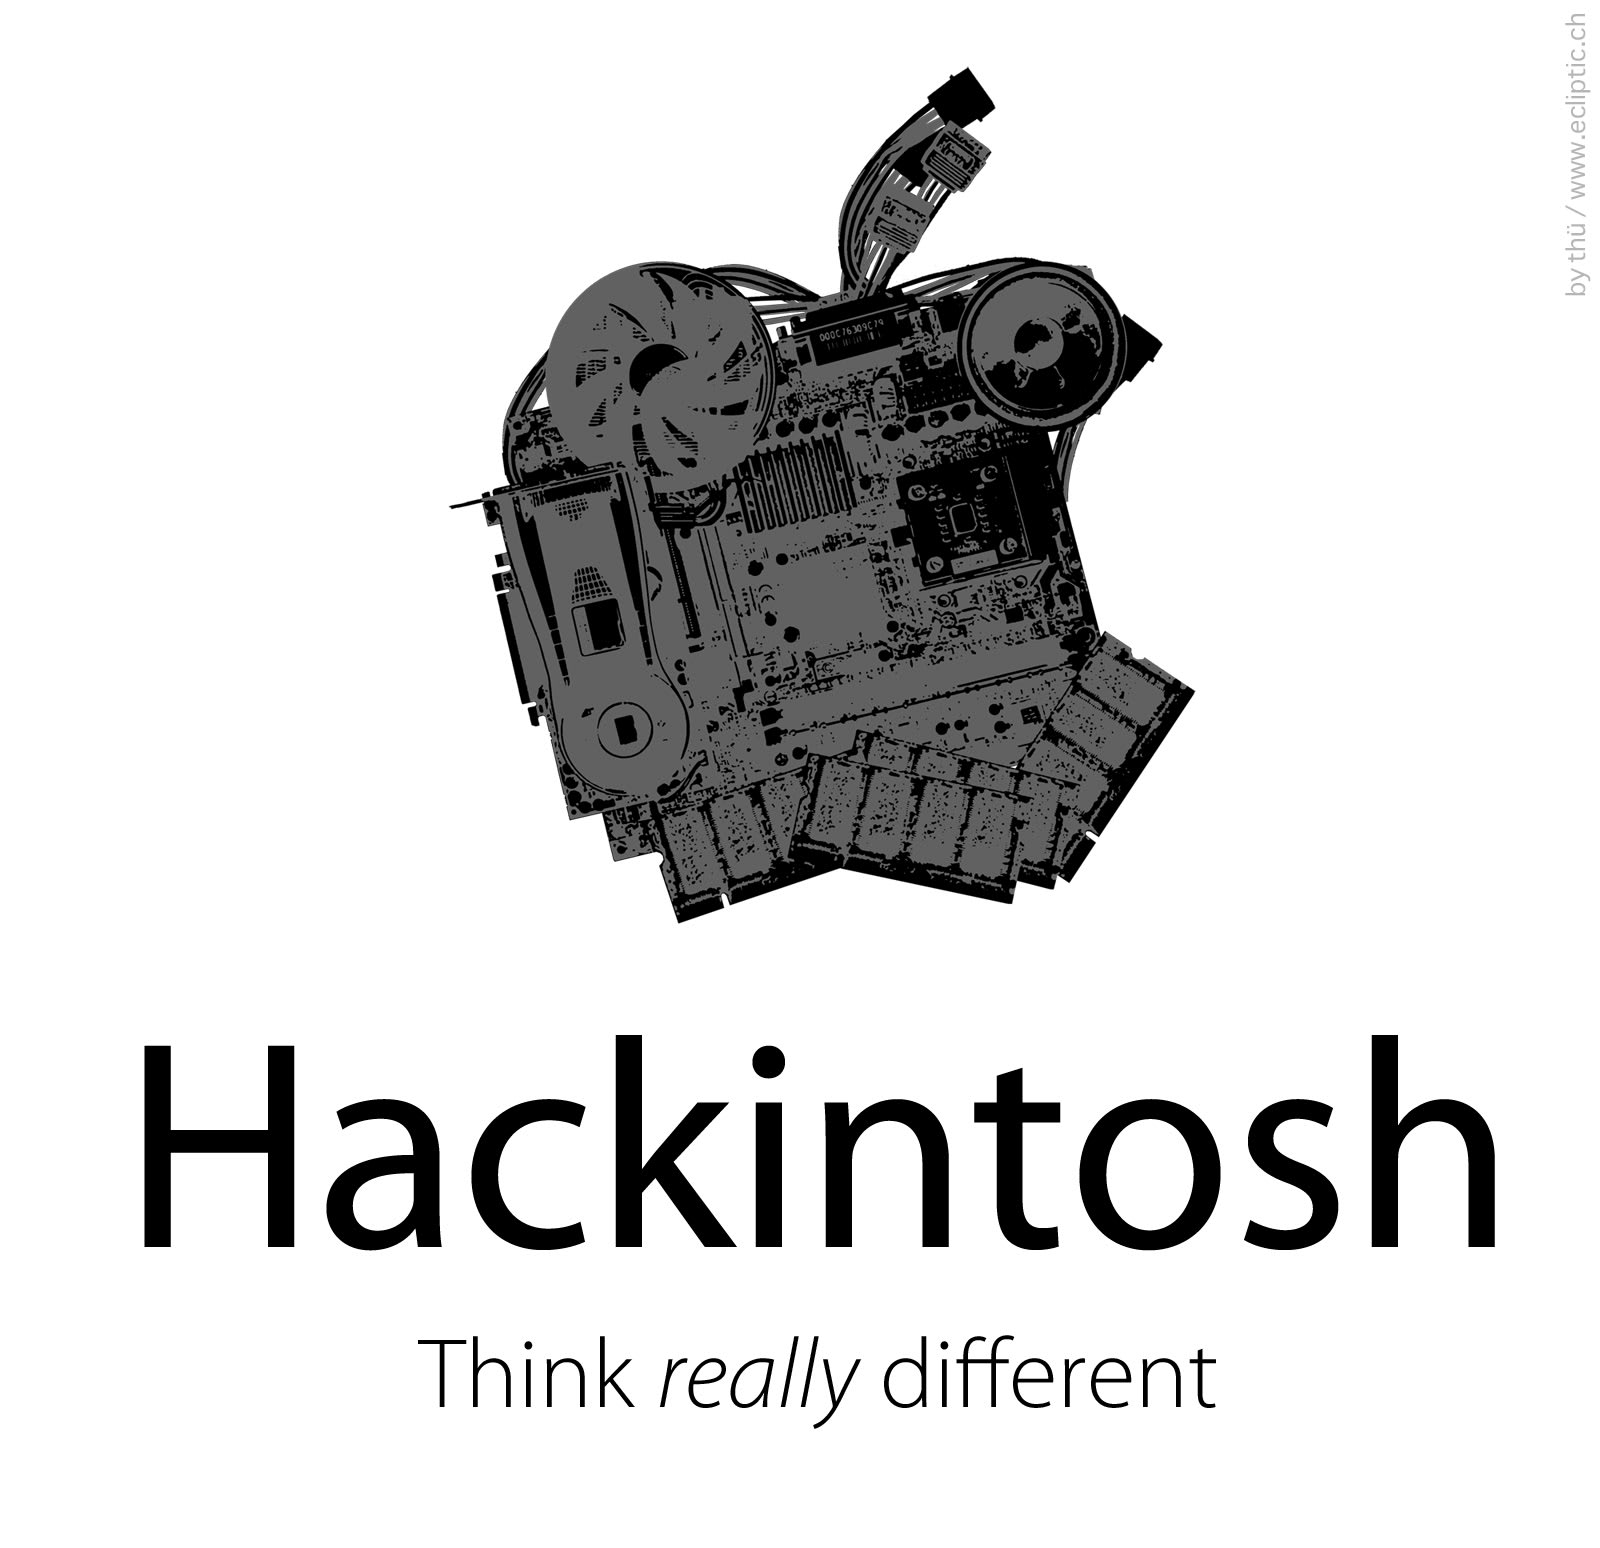 Hackintosh